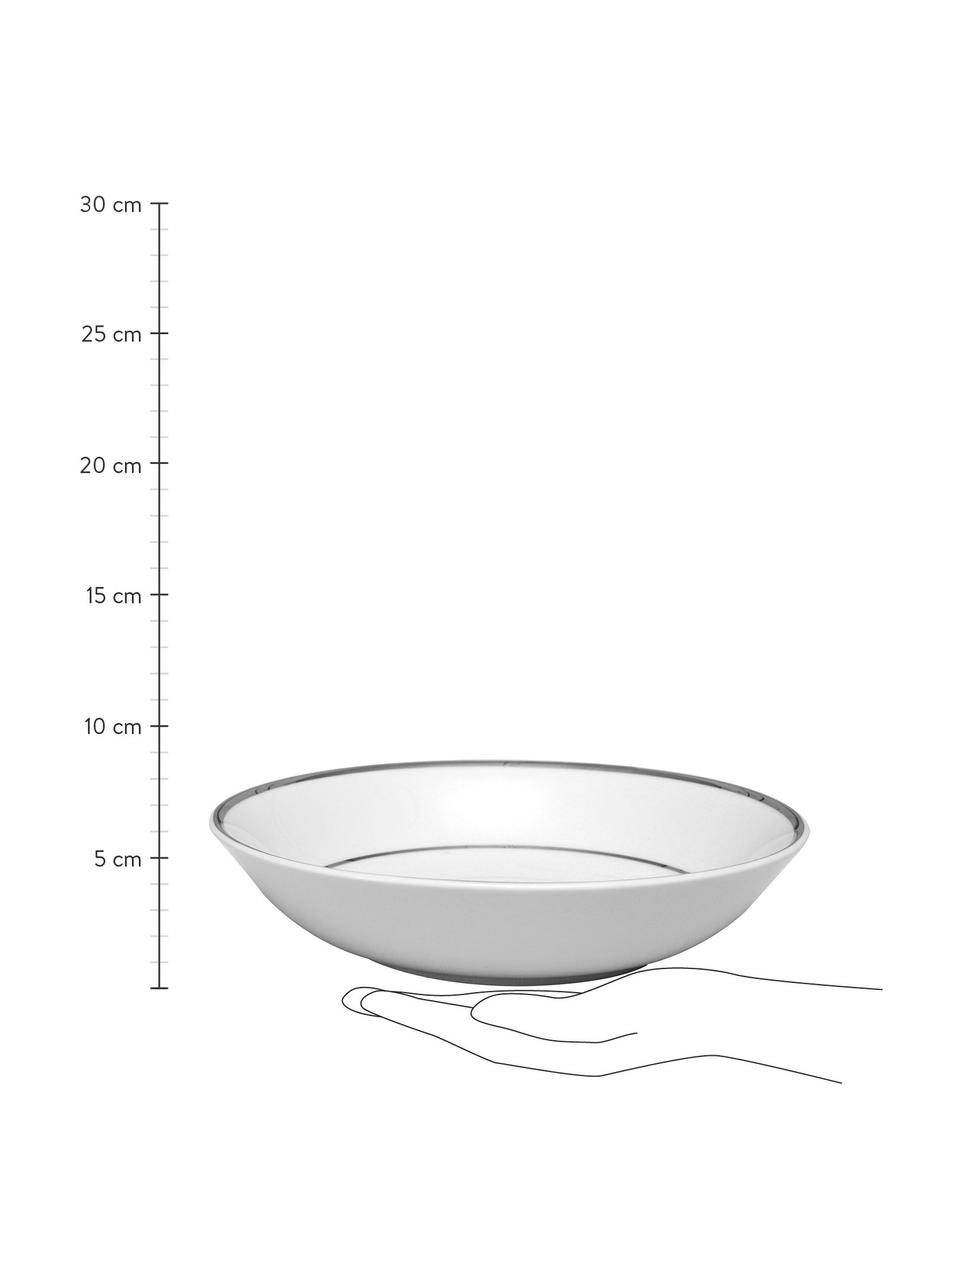 Porzellan-Suppenteller Ginger mit silberfarbenem Rand, 6 Stück, Porzellan, Weiß, Silberfarben, Ø 23 x H 5 cm